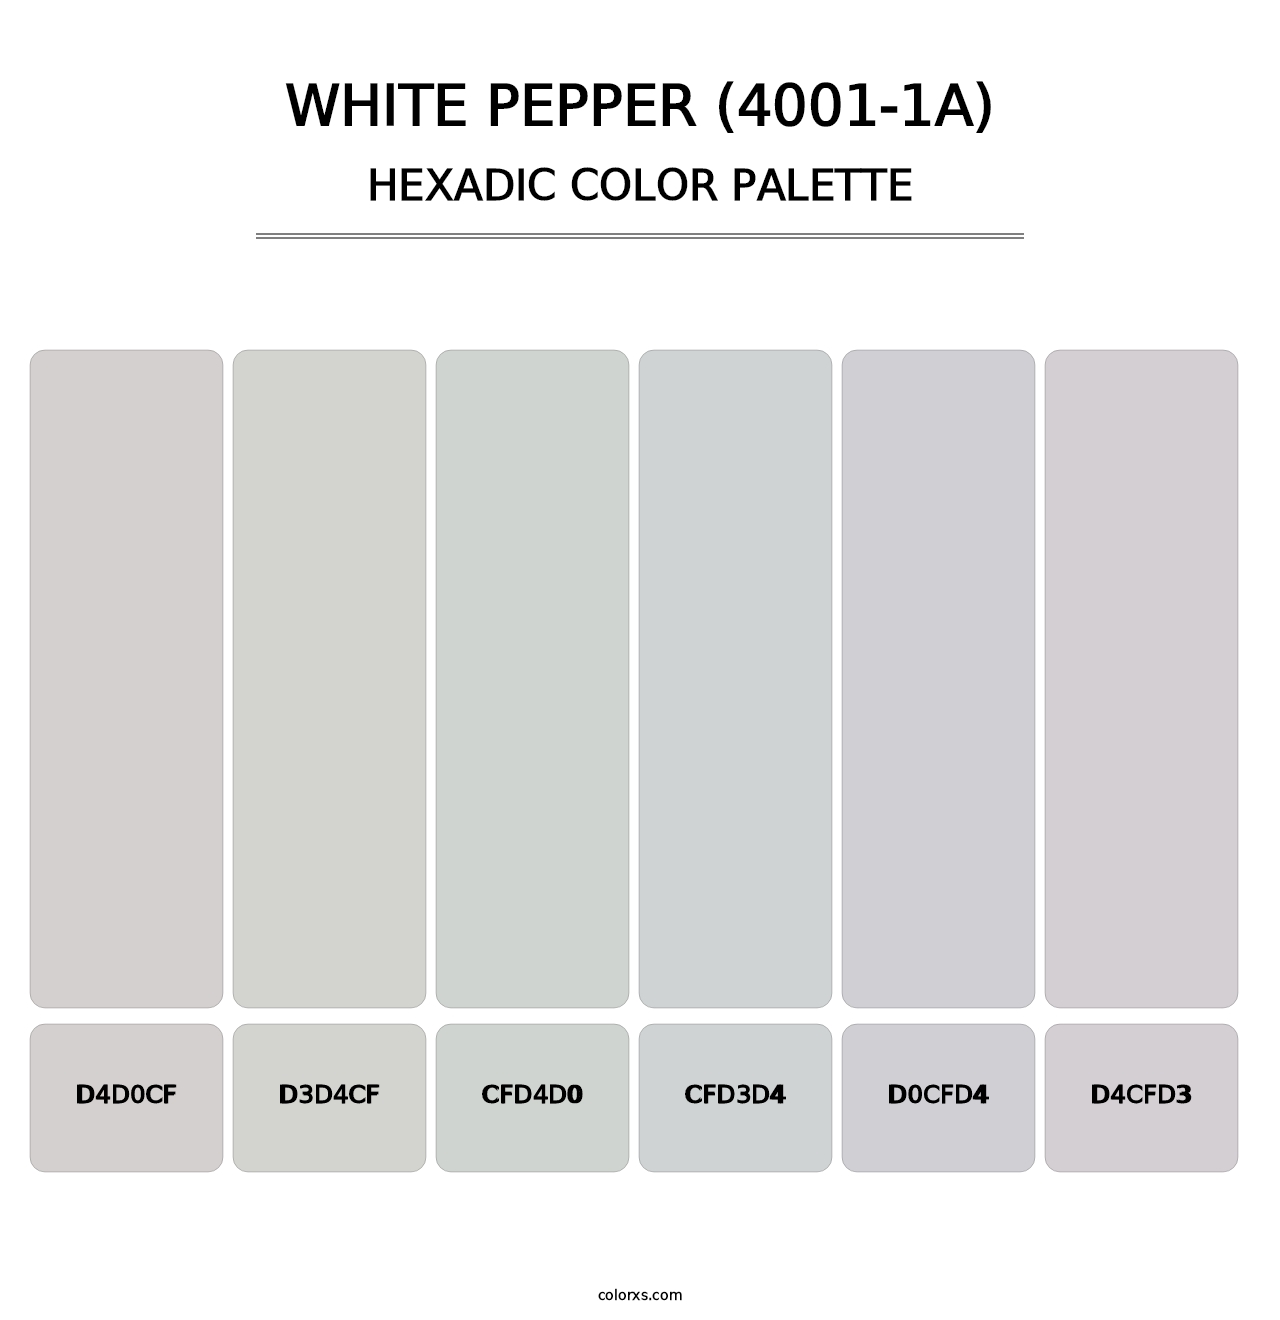 White Pepper (4001-1A) - Hexadic Color Palette